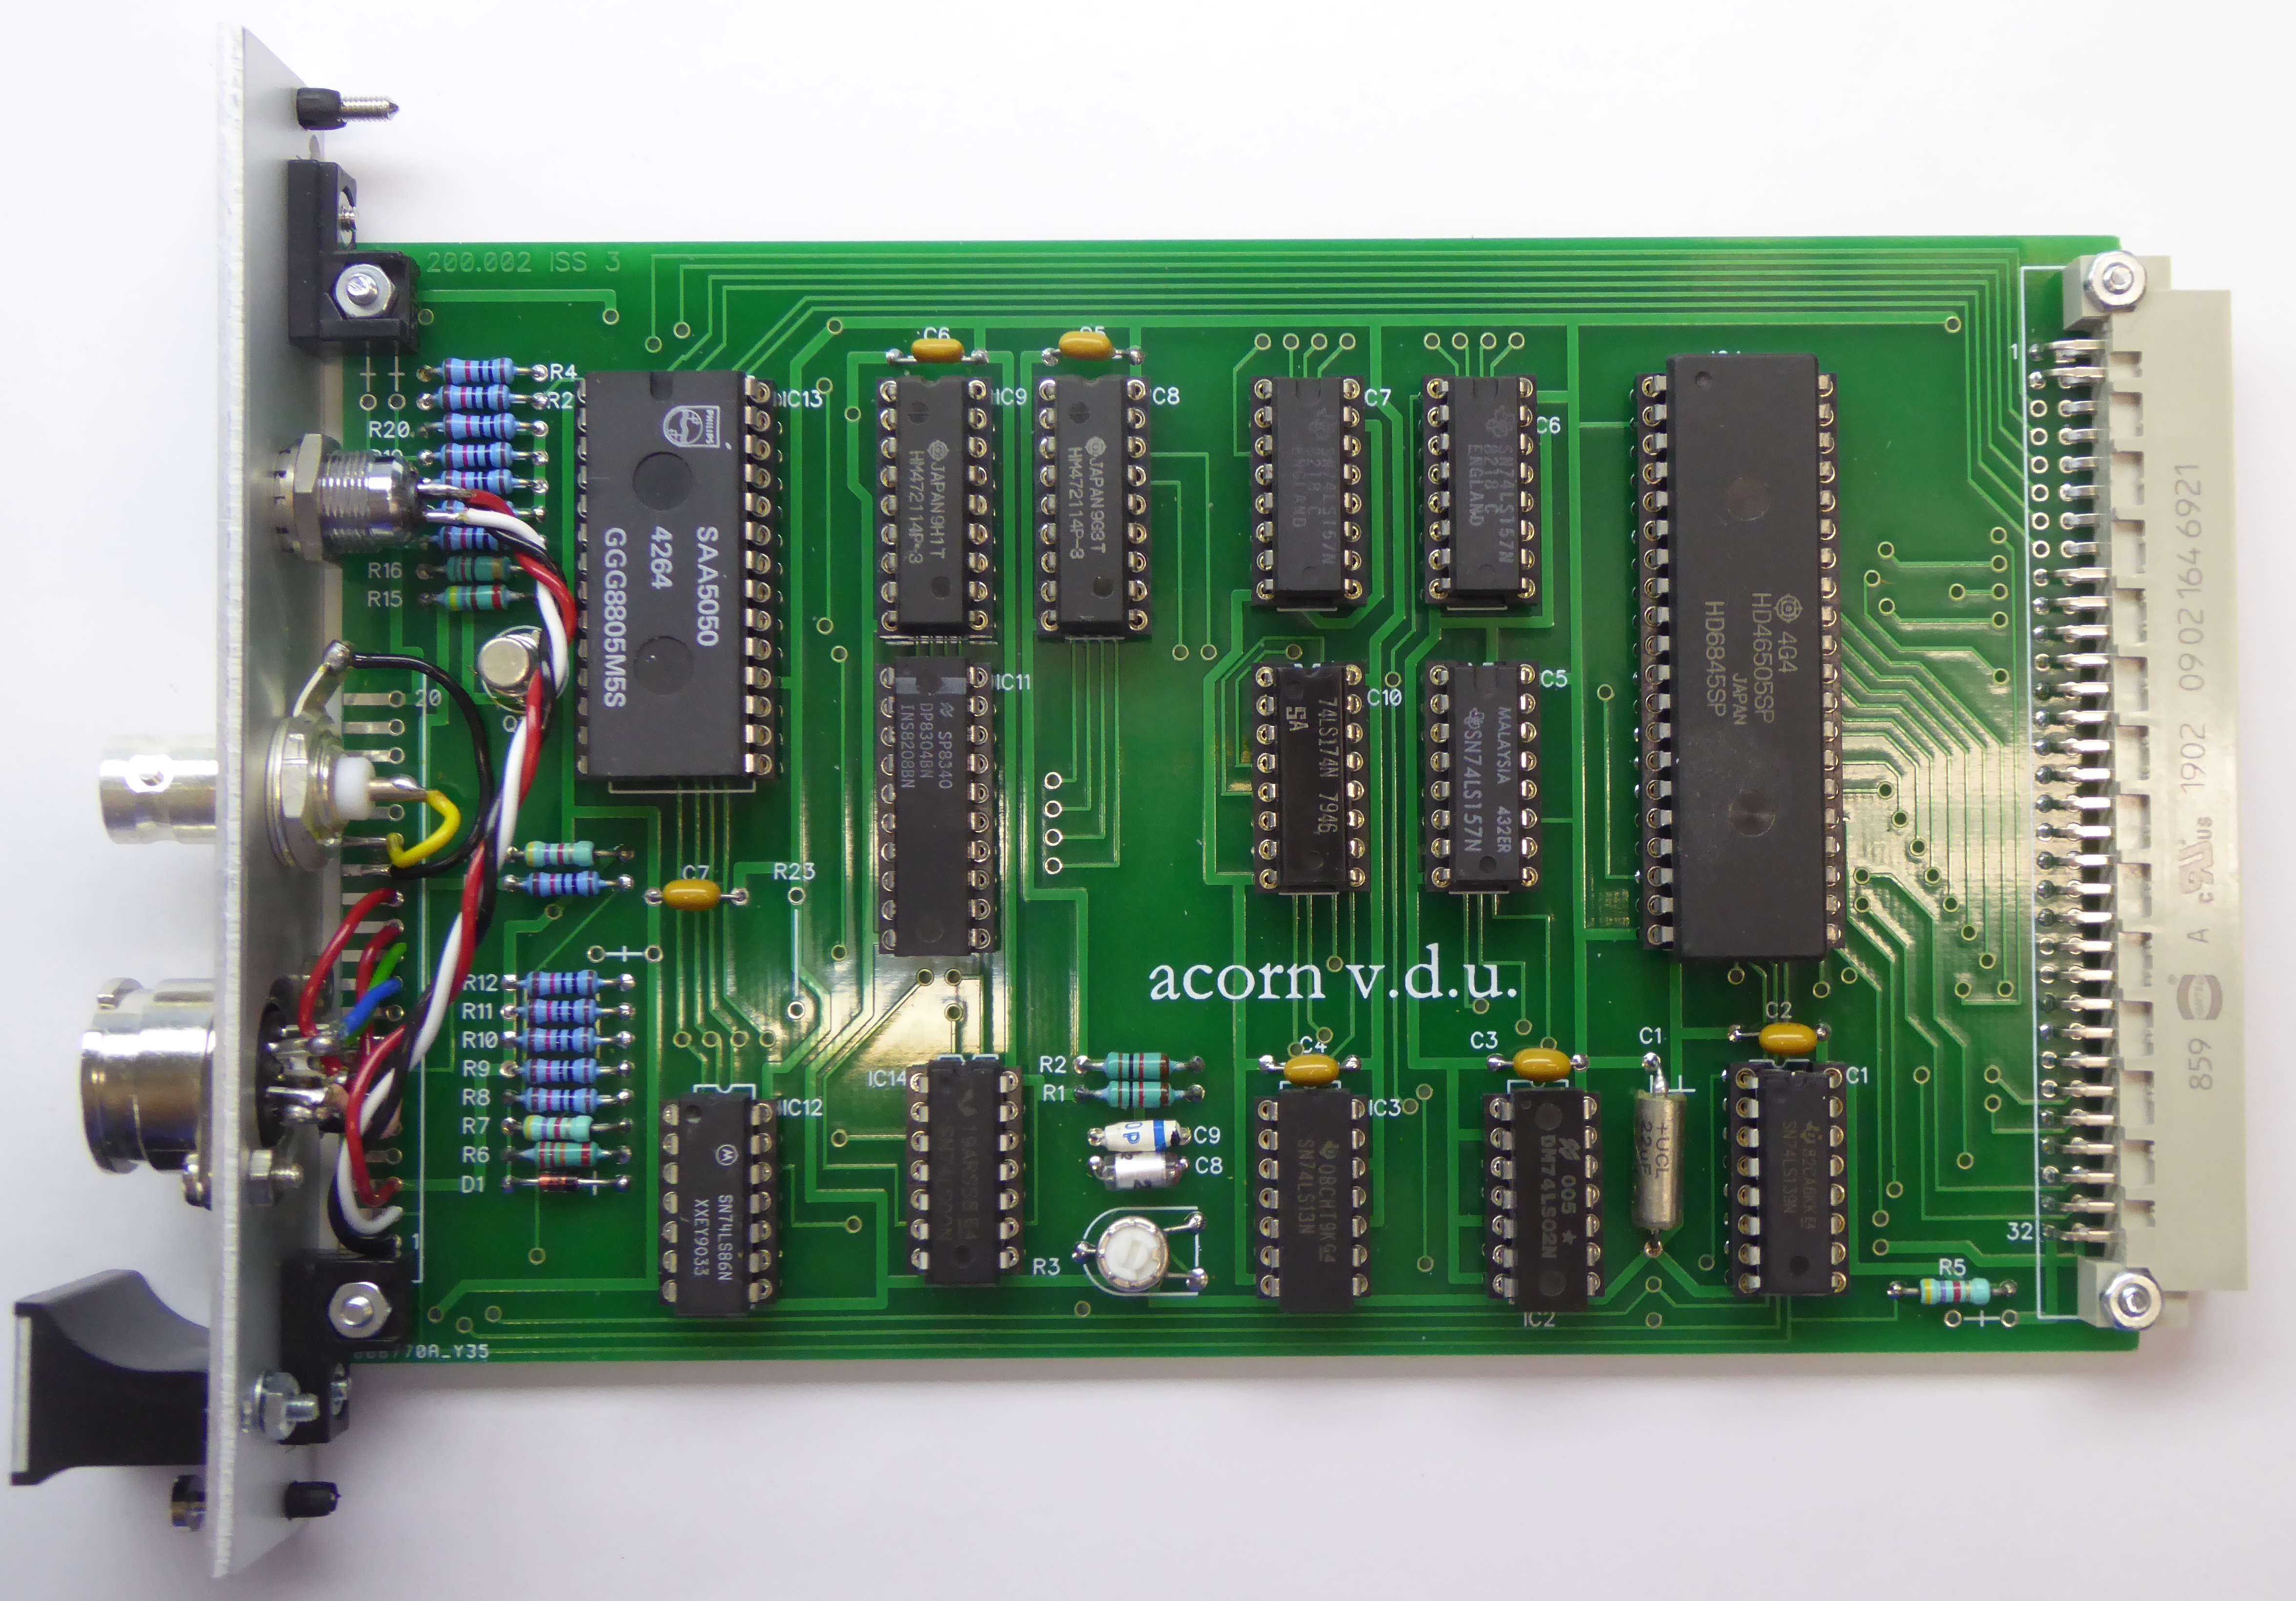 Replica 40x25 VDU (Teletext) Interface Board  Photo